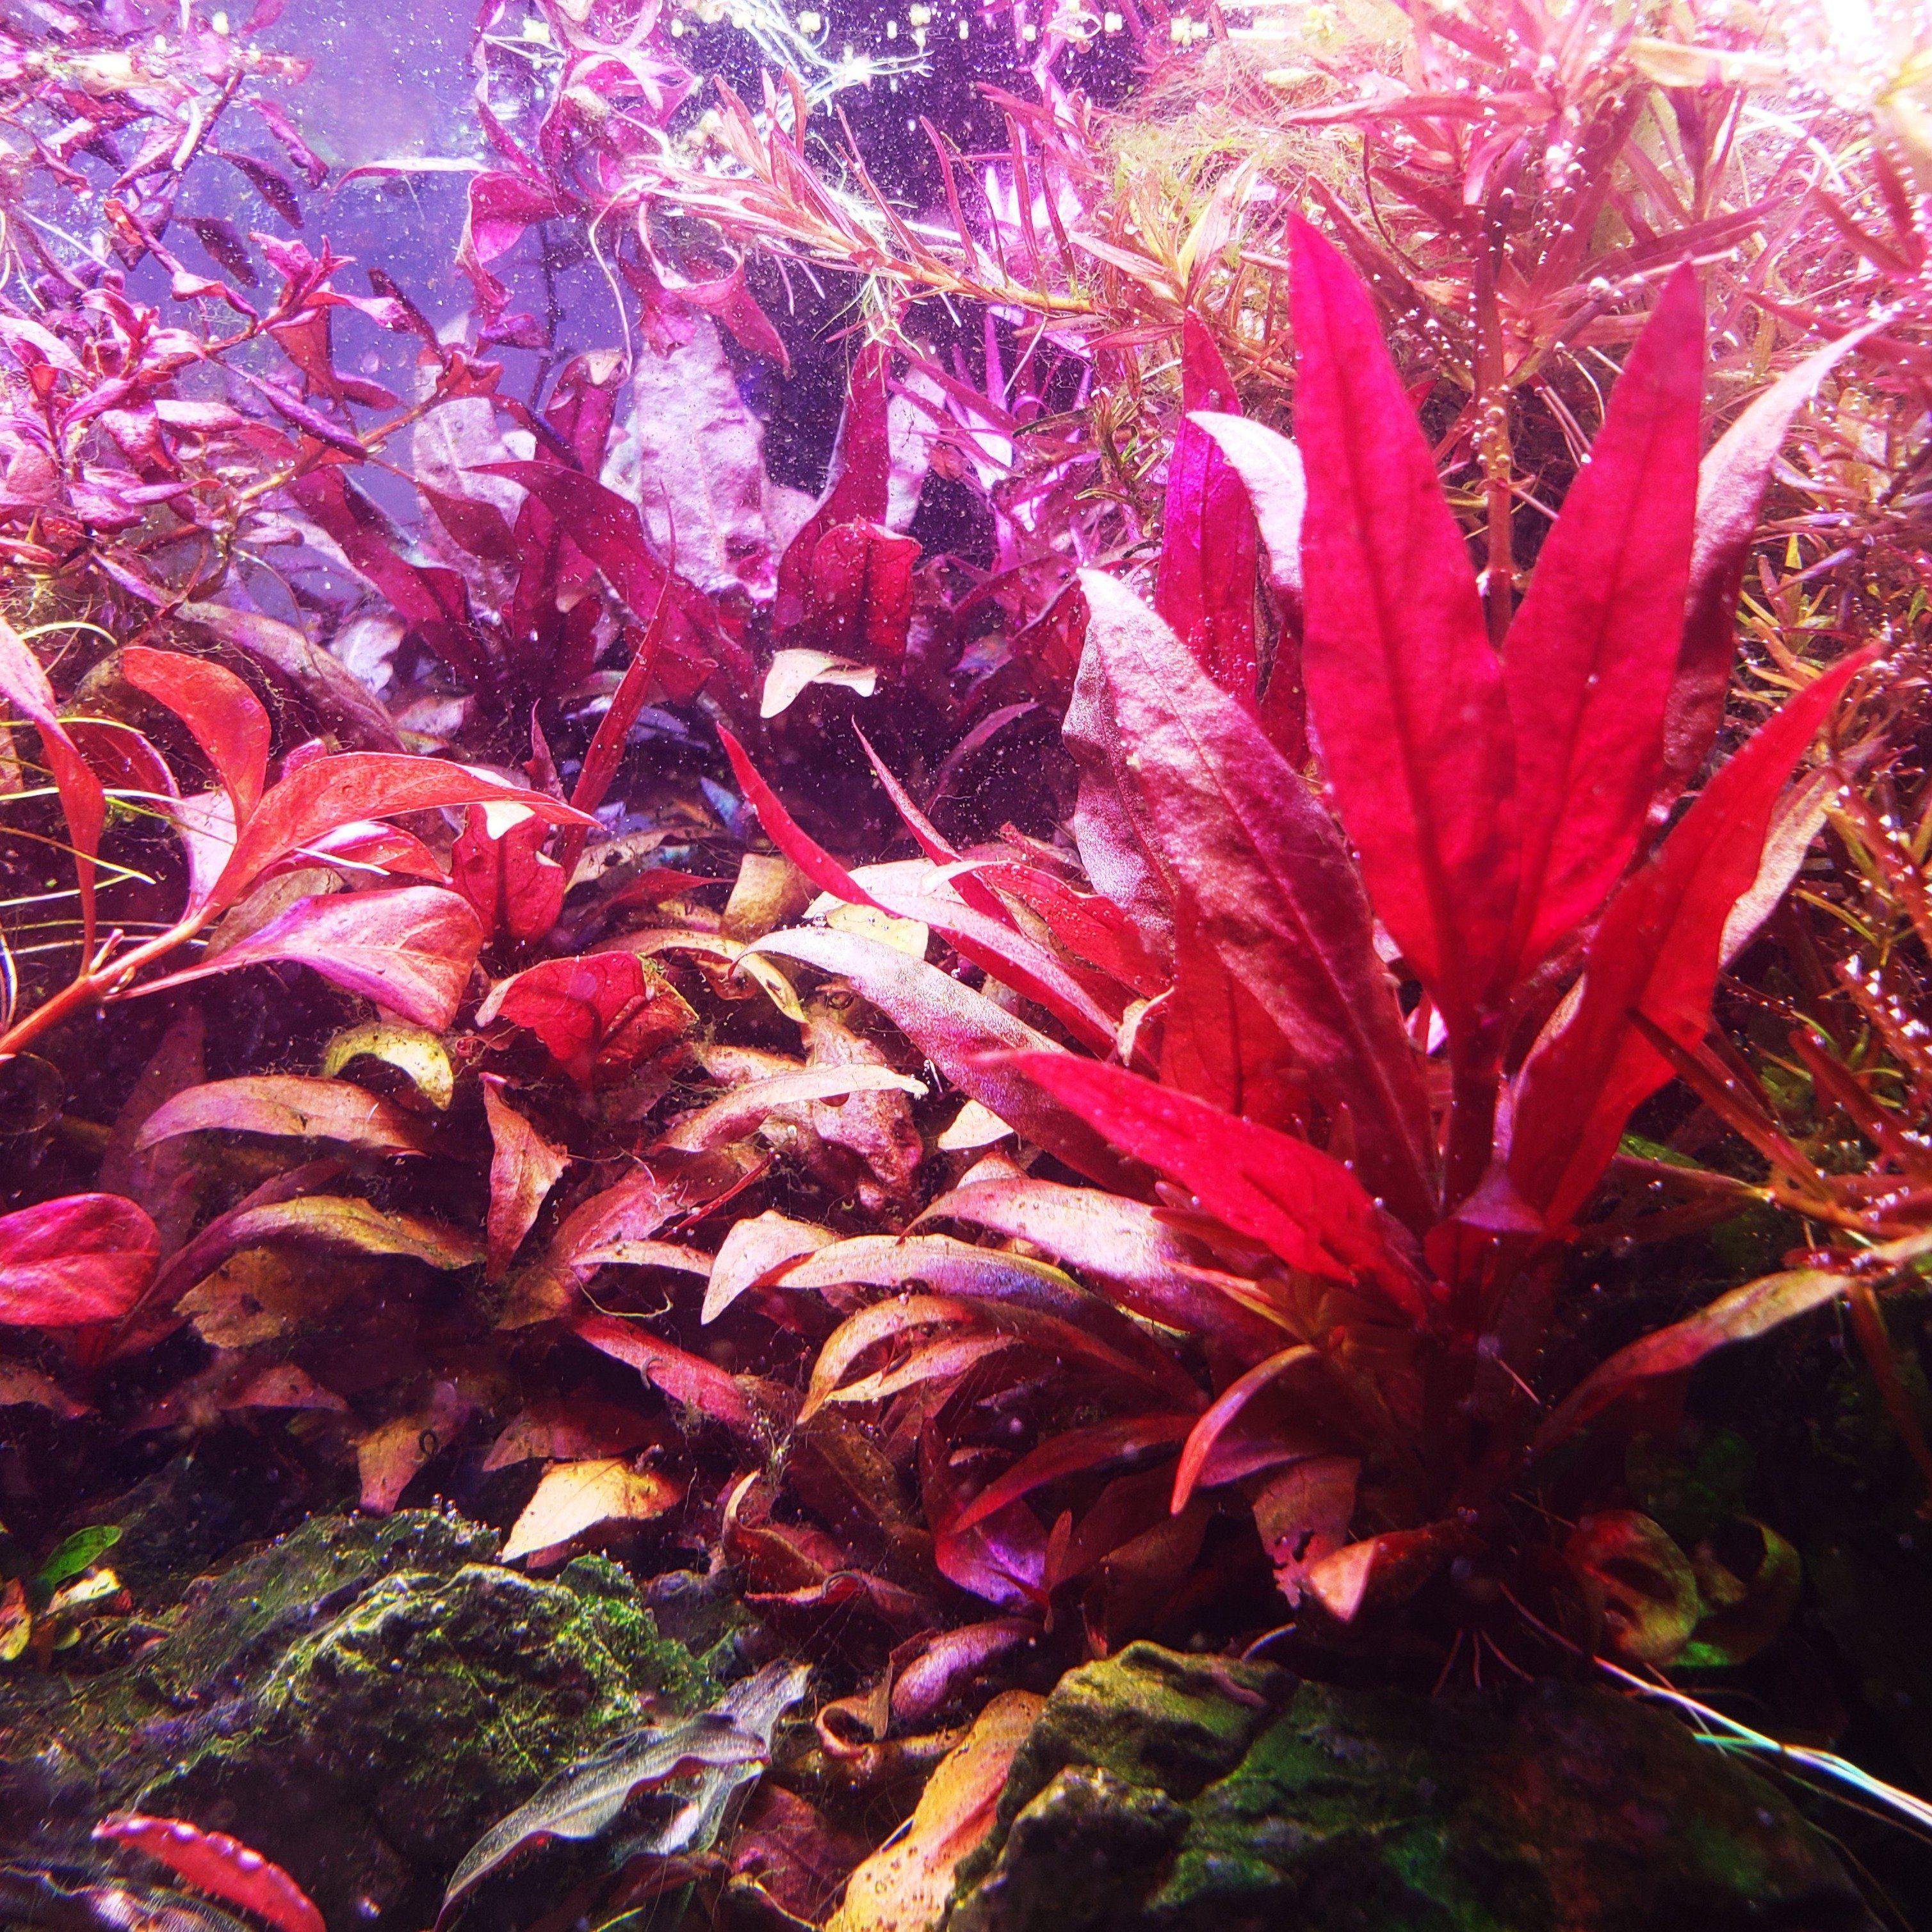 Alternanthera Reineckii Pink "Mini" - Windy City Aquariums